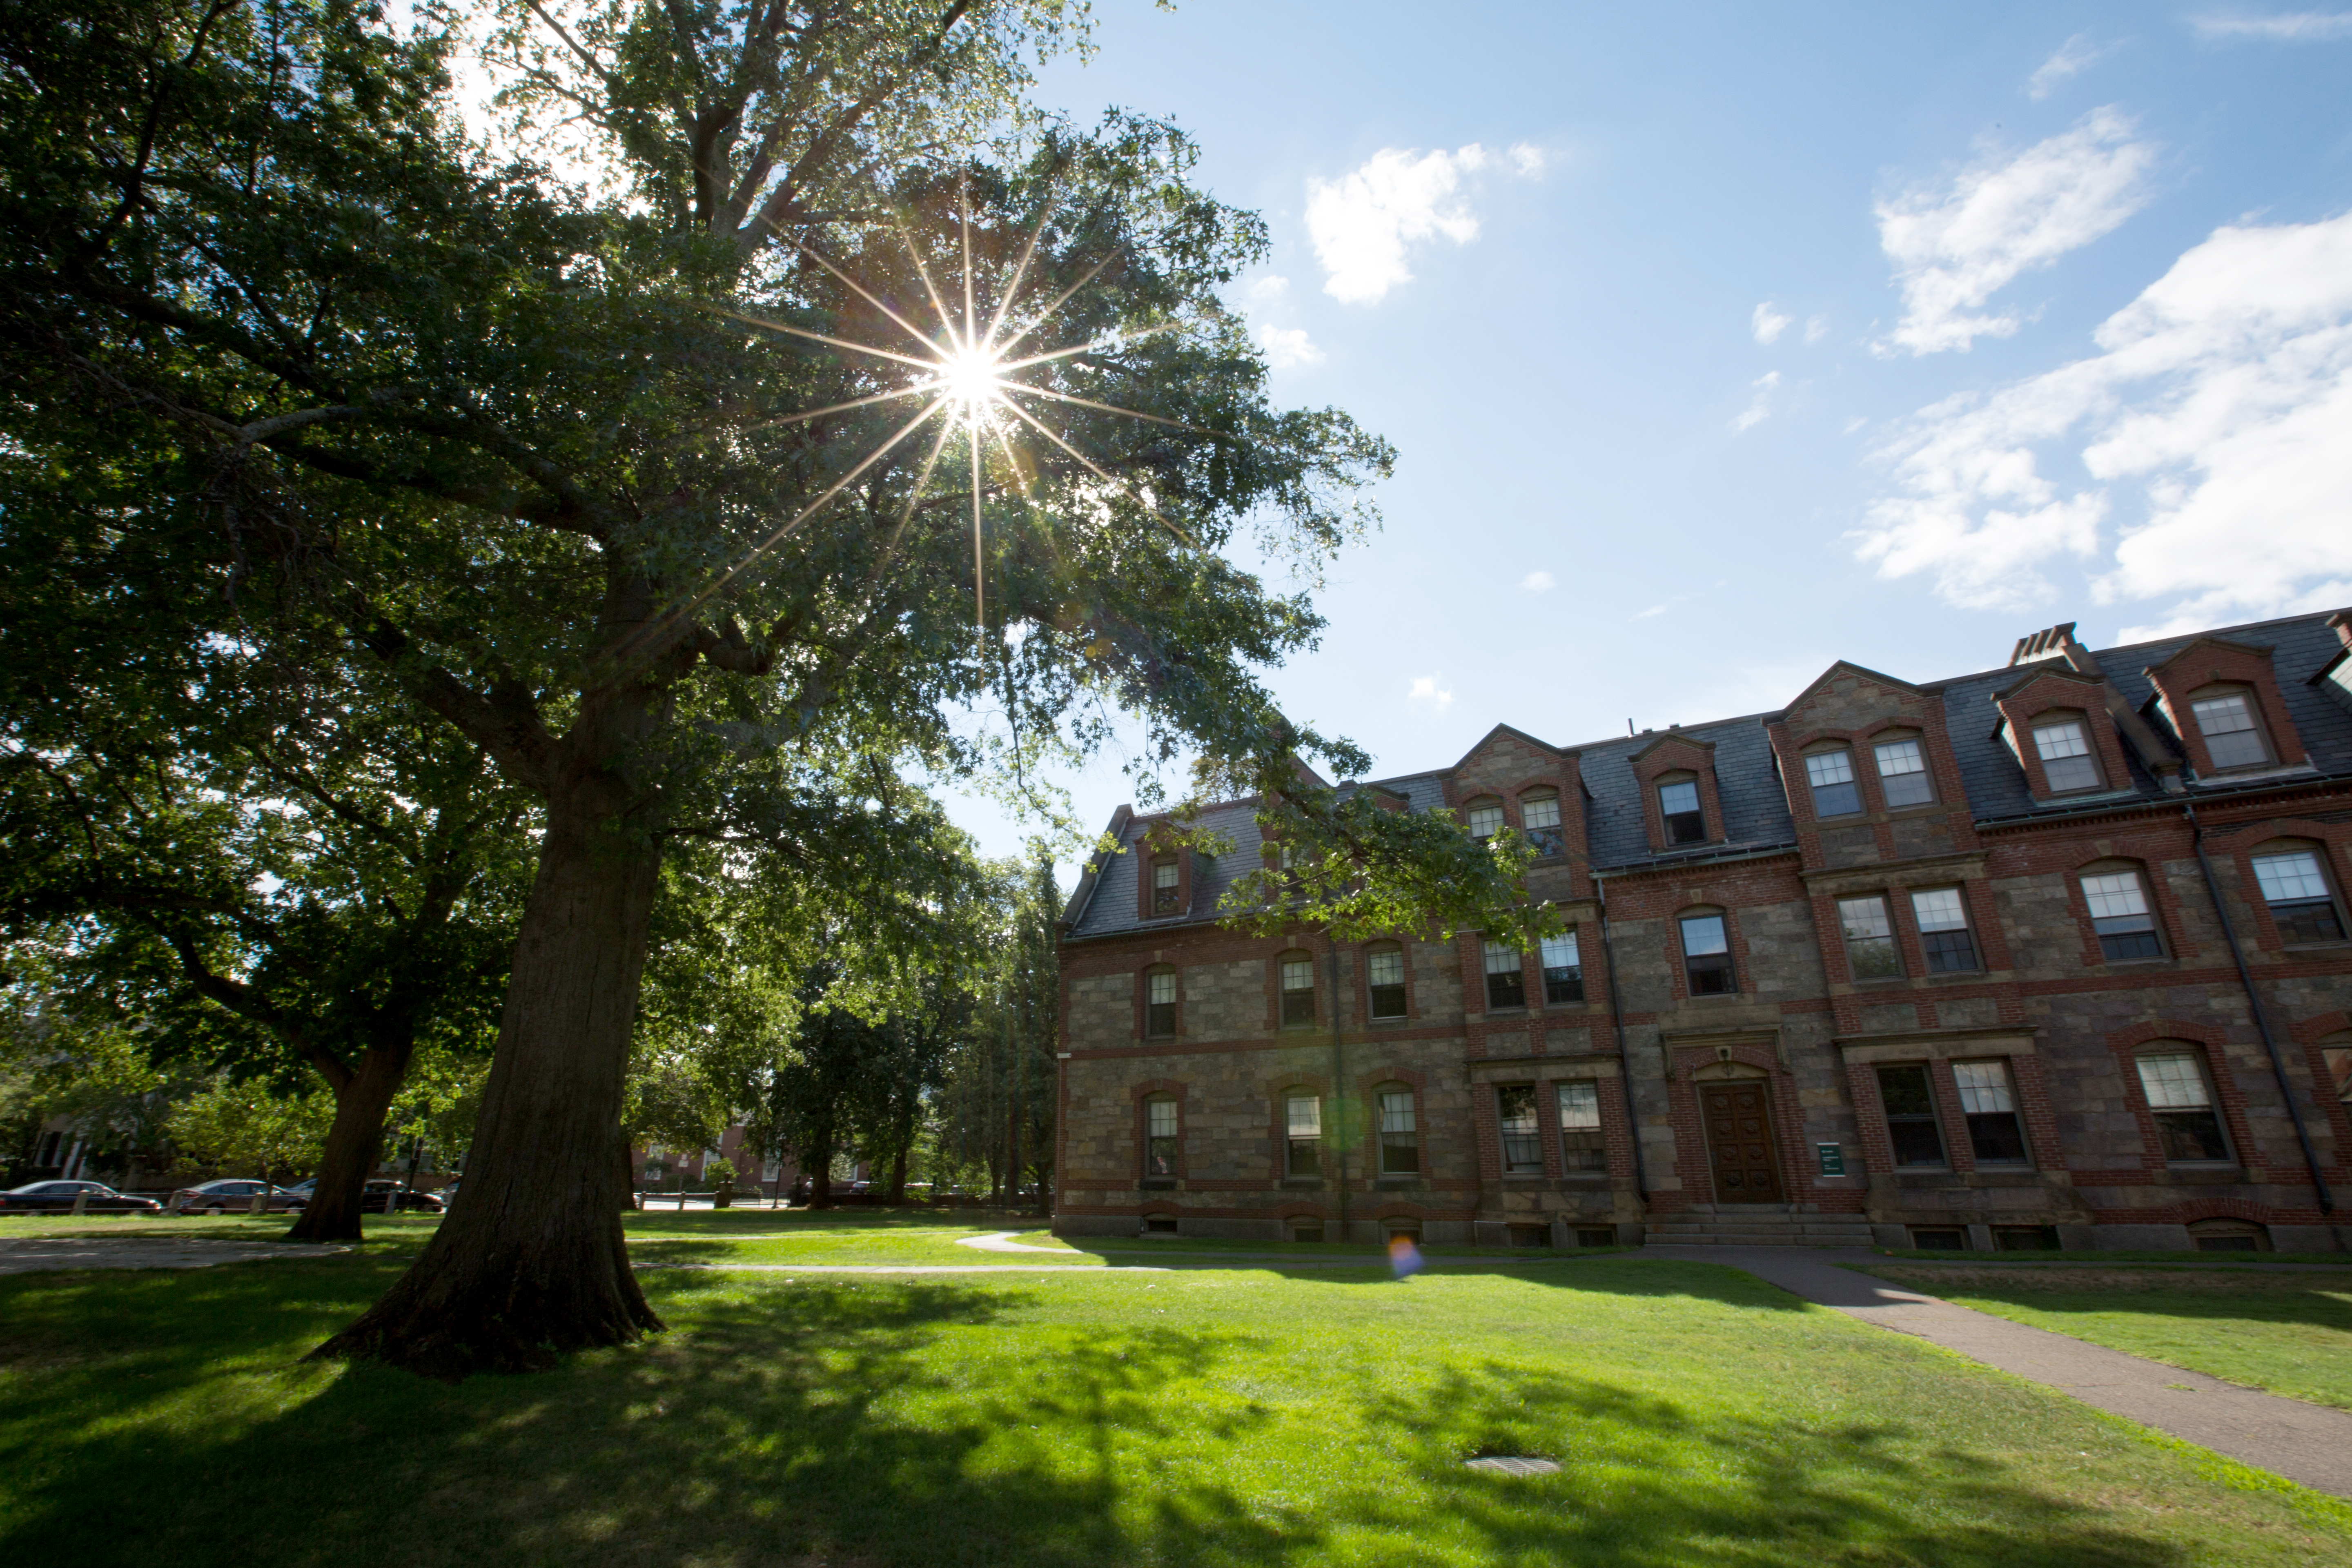 Lesley University campus in Cambridge Massachusetts